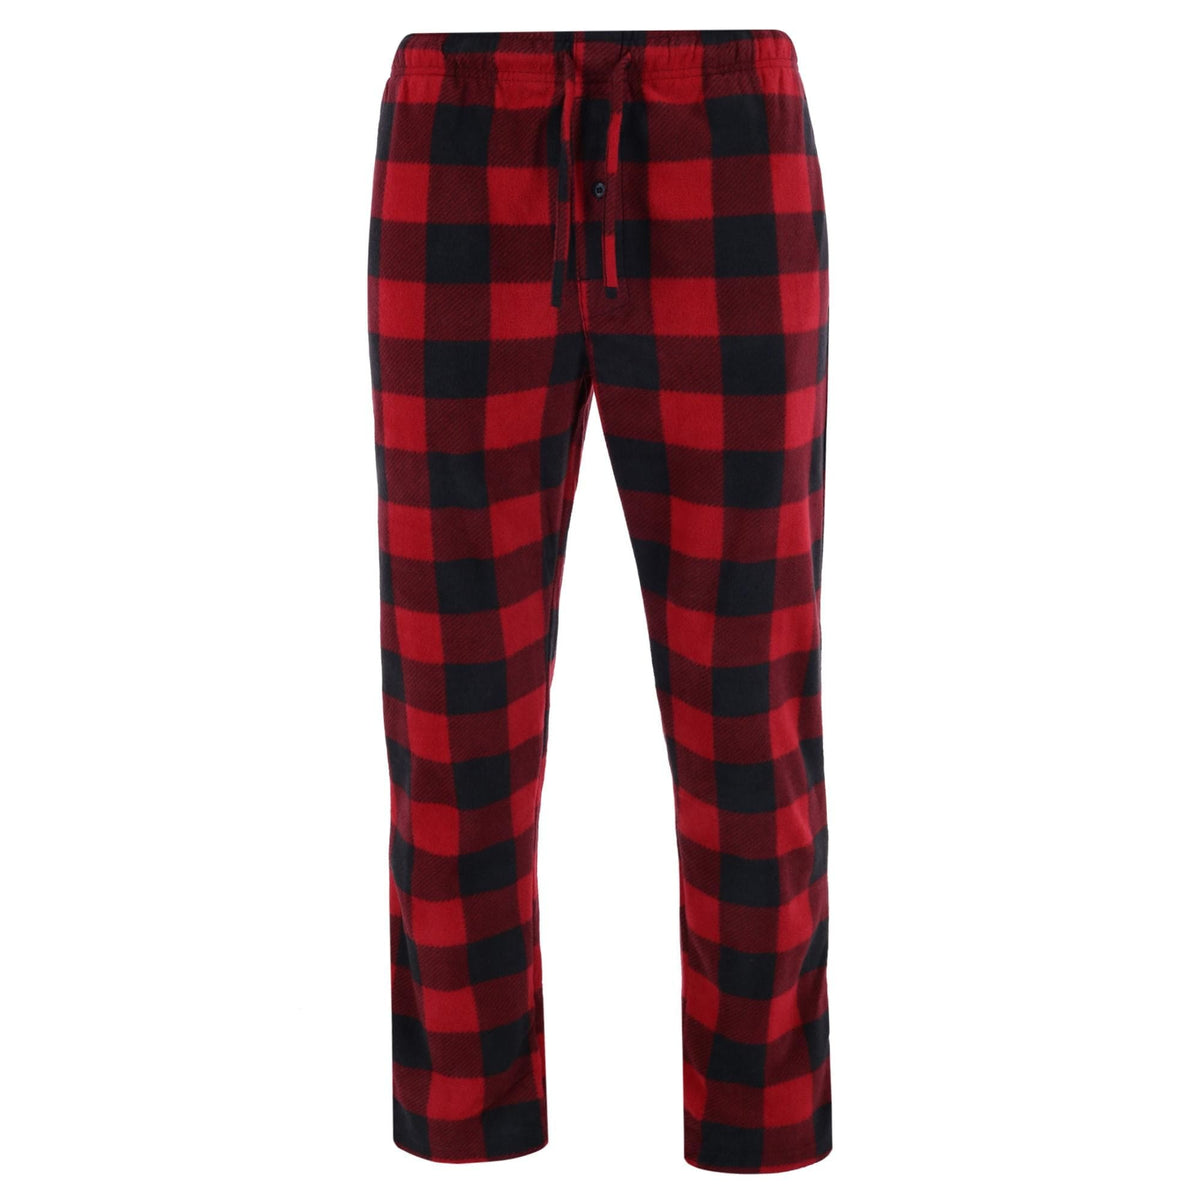 Men's Big and Tall Fleece Pajama Pants by Hanes | Pajama Bottoms at ...